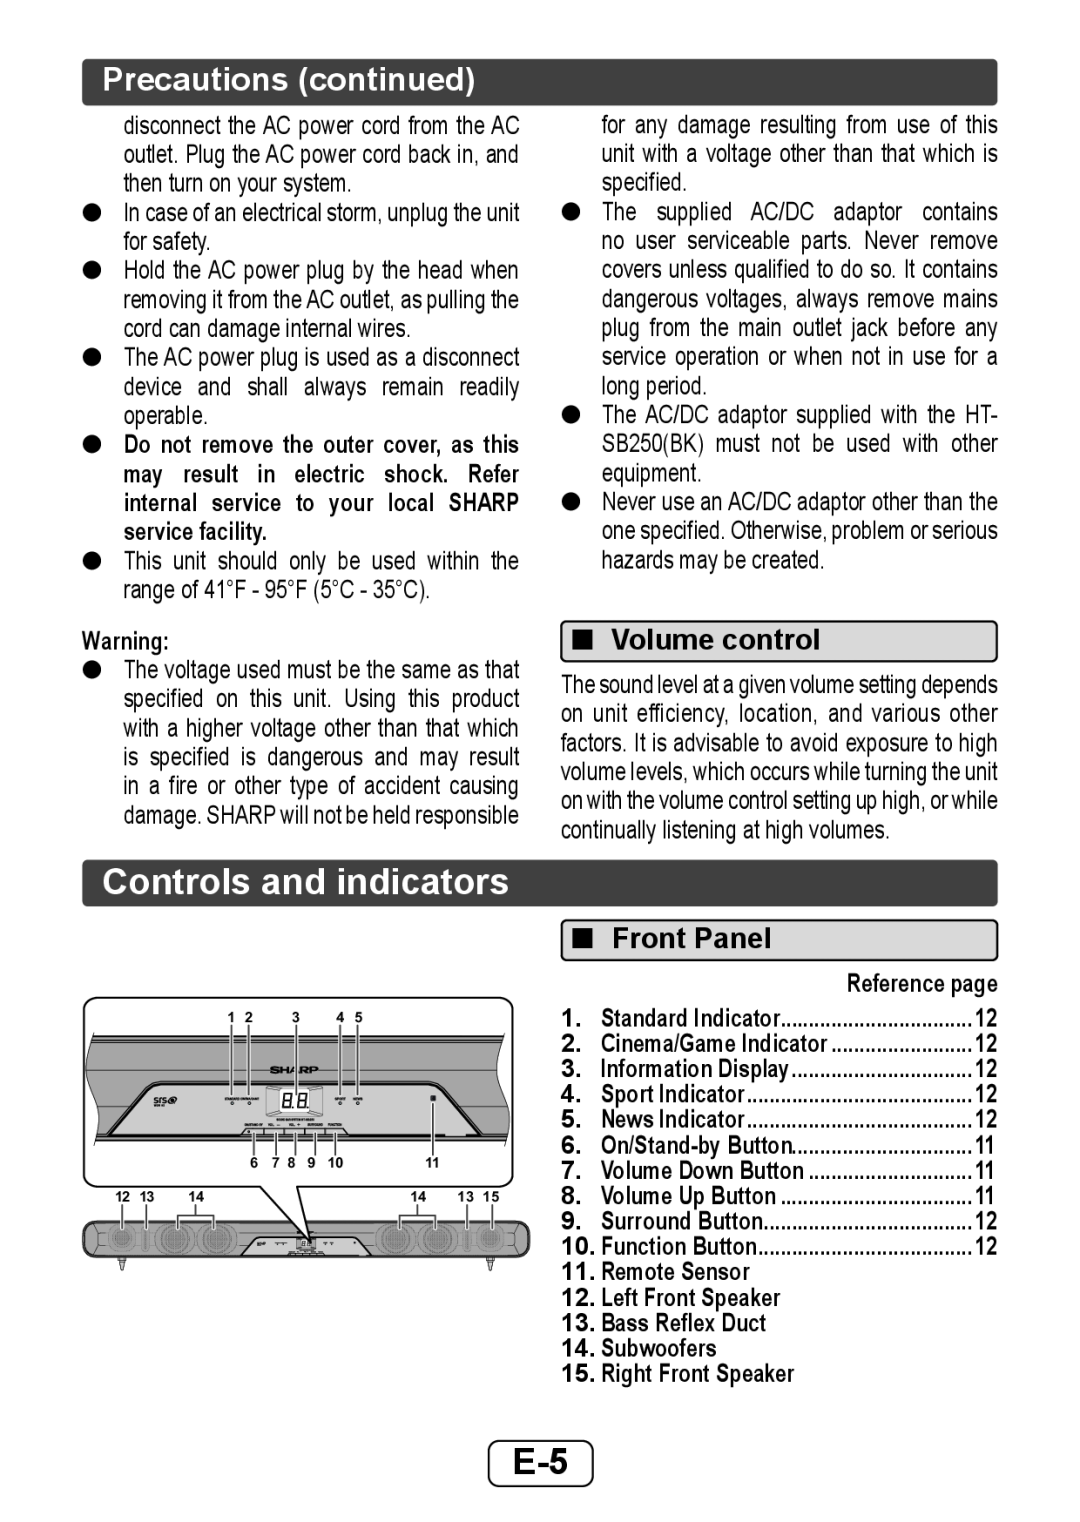 Sharp HTSB250 Controls and indicators, Precautions continued, Volume control, Front Panel, . Remote Sensor 